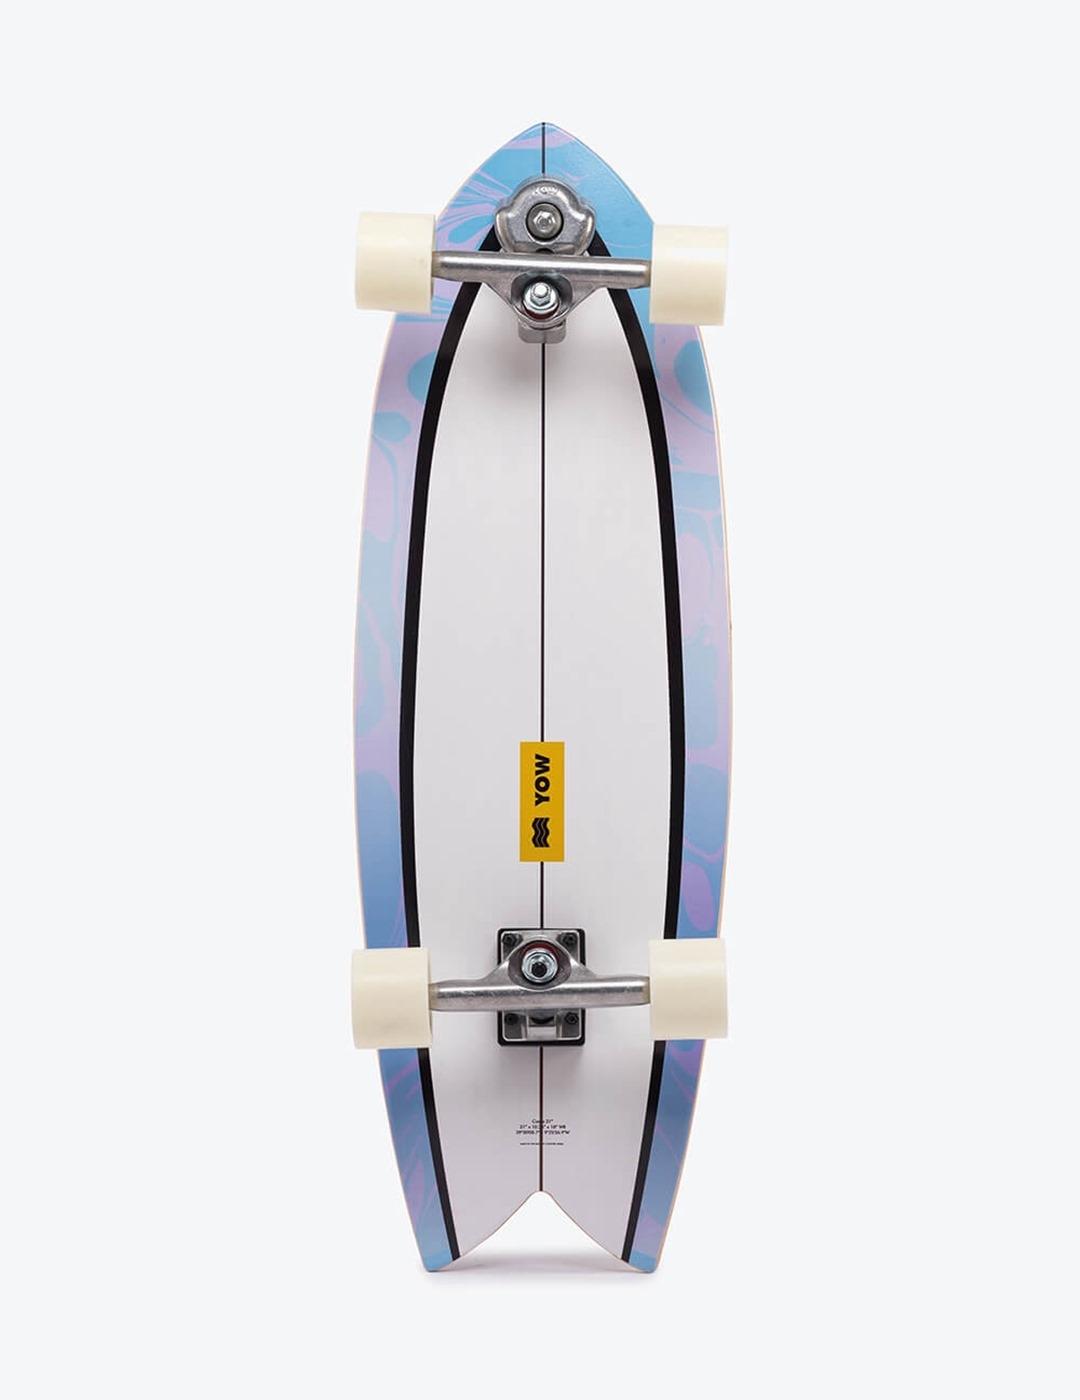 Surf Skate Yow Coxos 31' x 10.25' Power Surfing Series